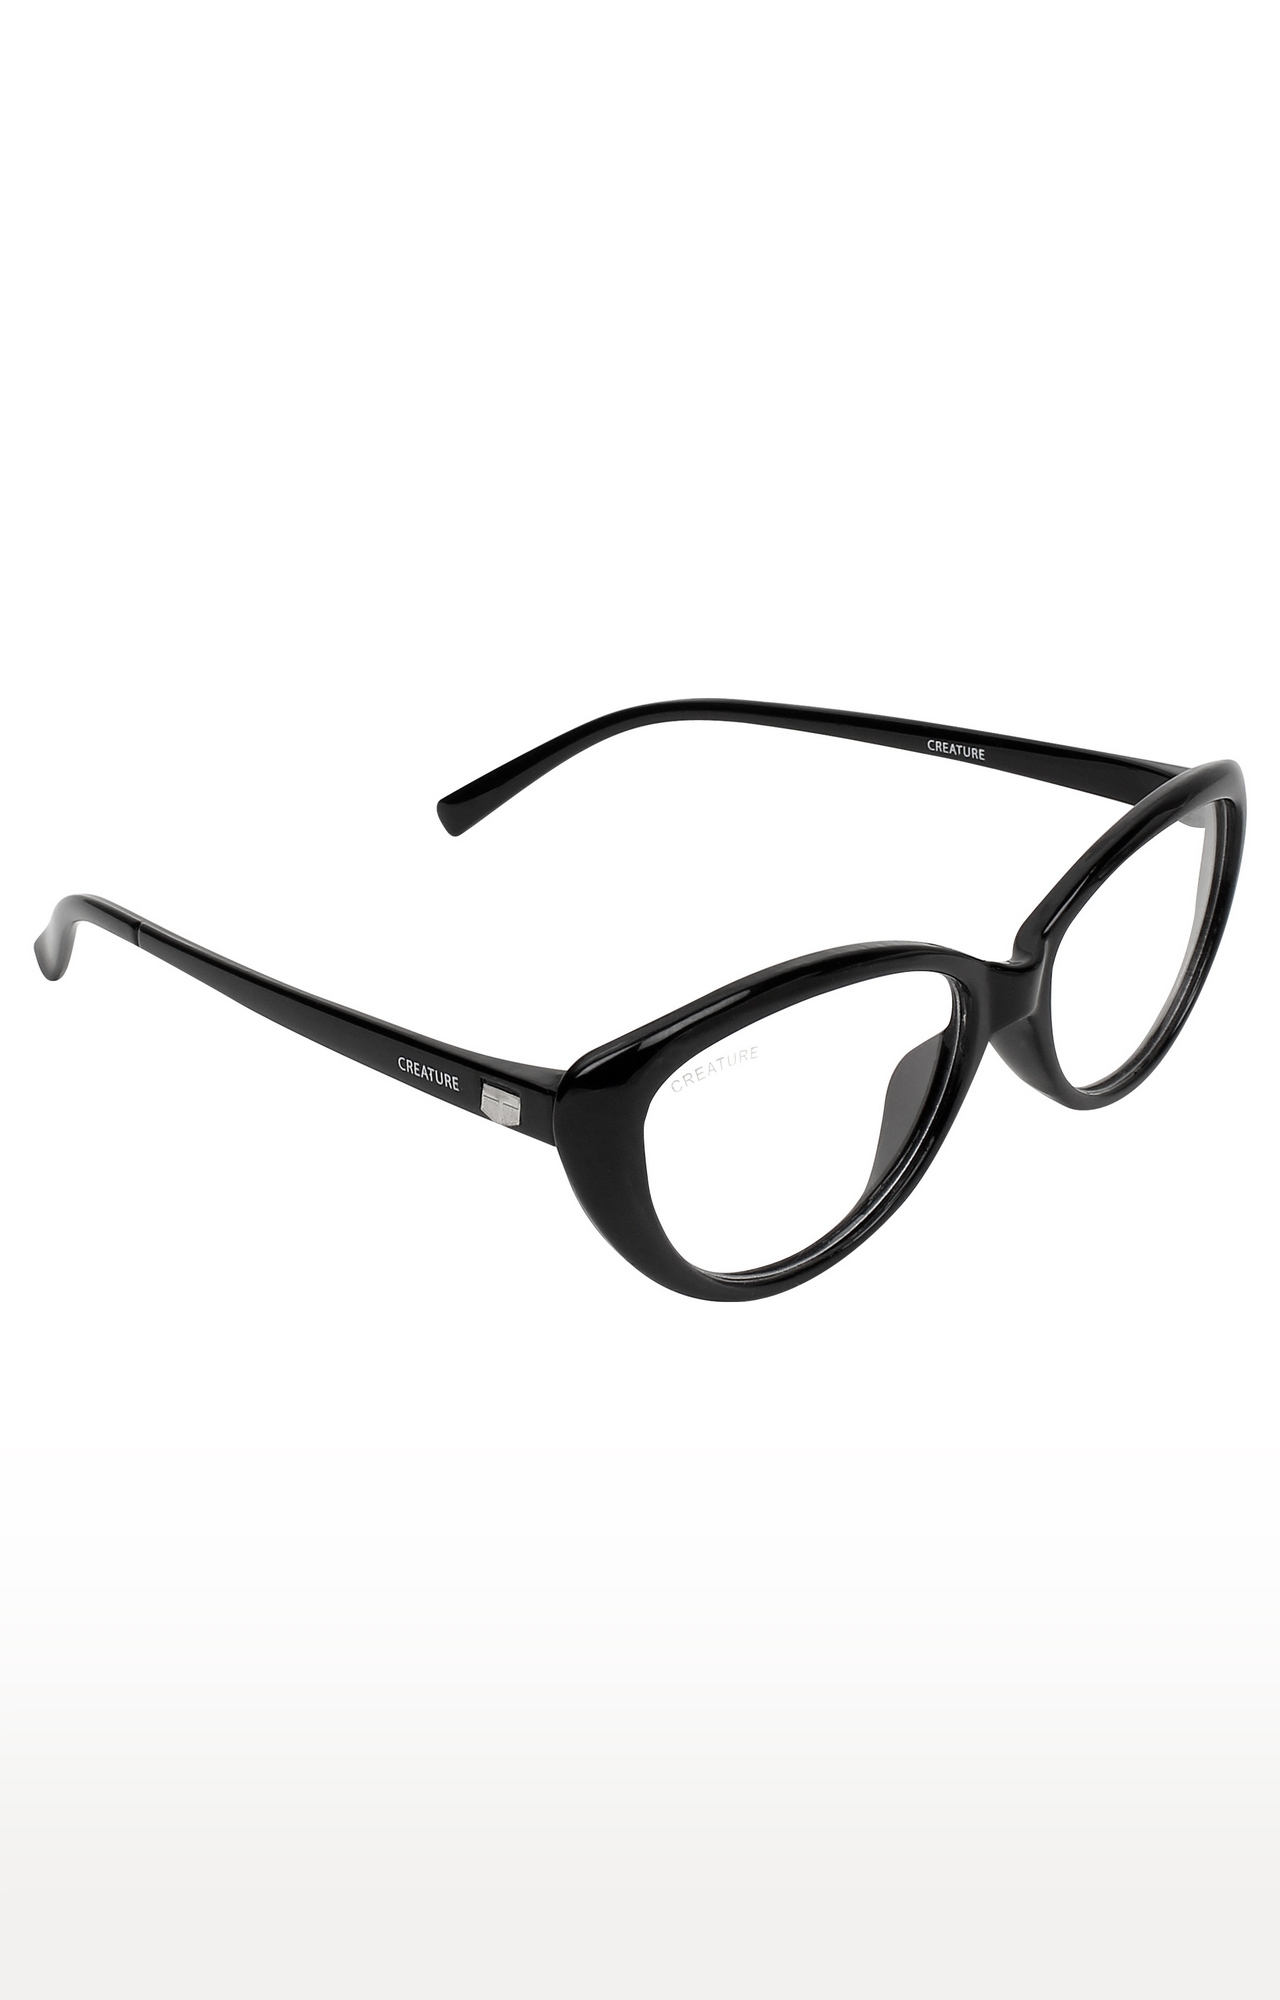 CREATURE | CREATURE Black Raised Retro Cat-Eye Glasses (Lens-Clear|Frame-Black)